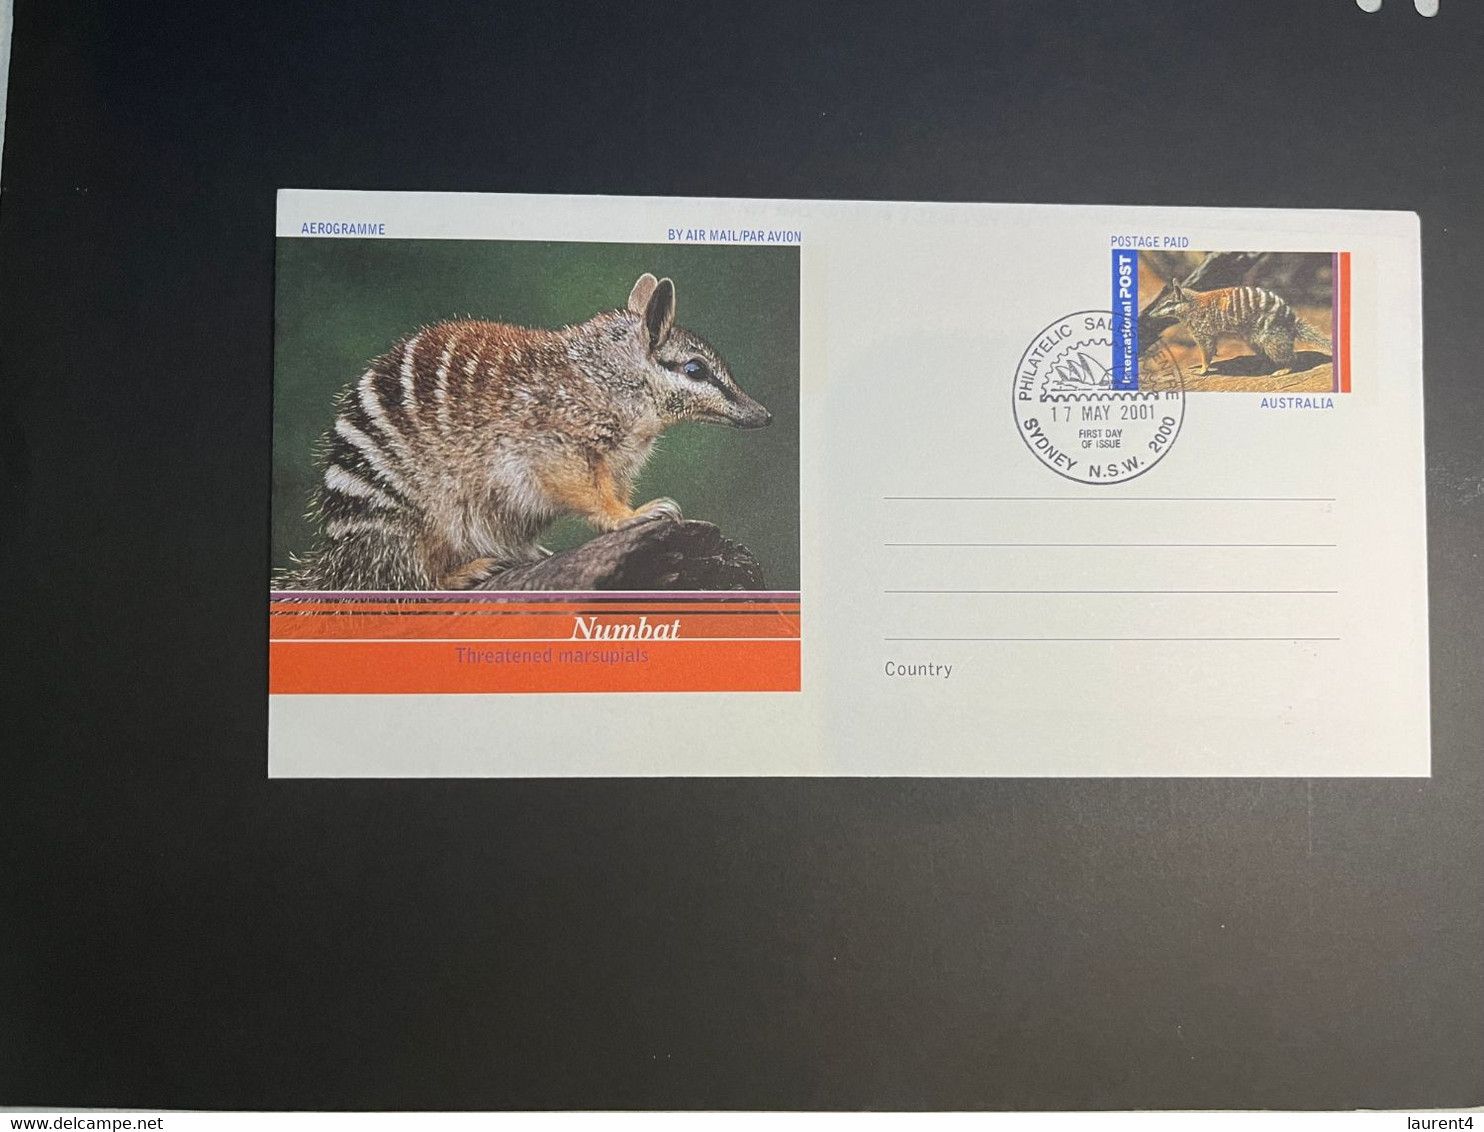 (3 N 45 A) Australia Aerogramme - Australian Animals (2001 x 5 aerogramme)